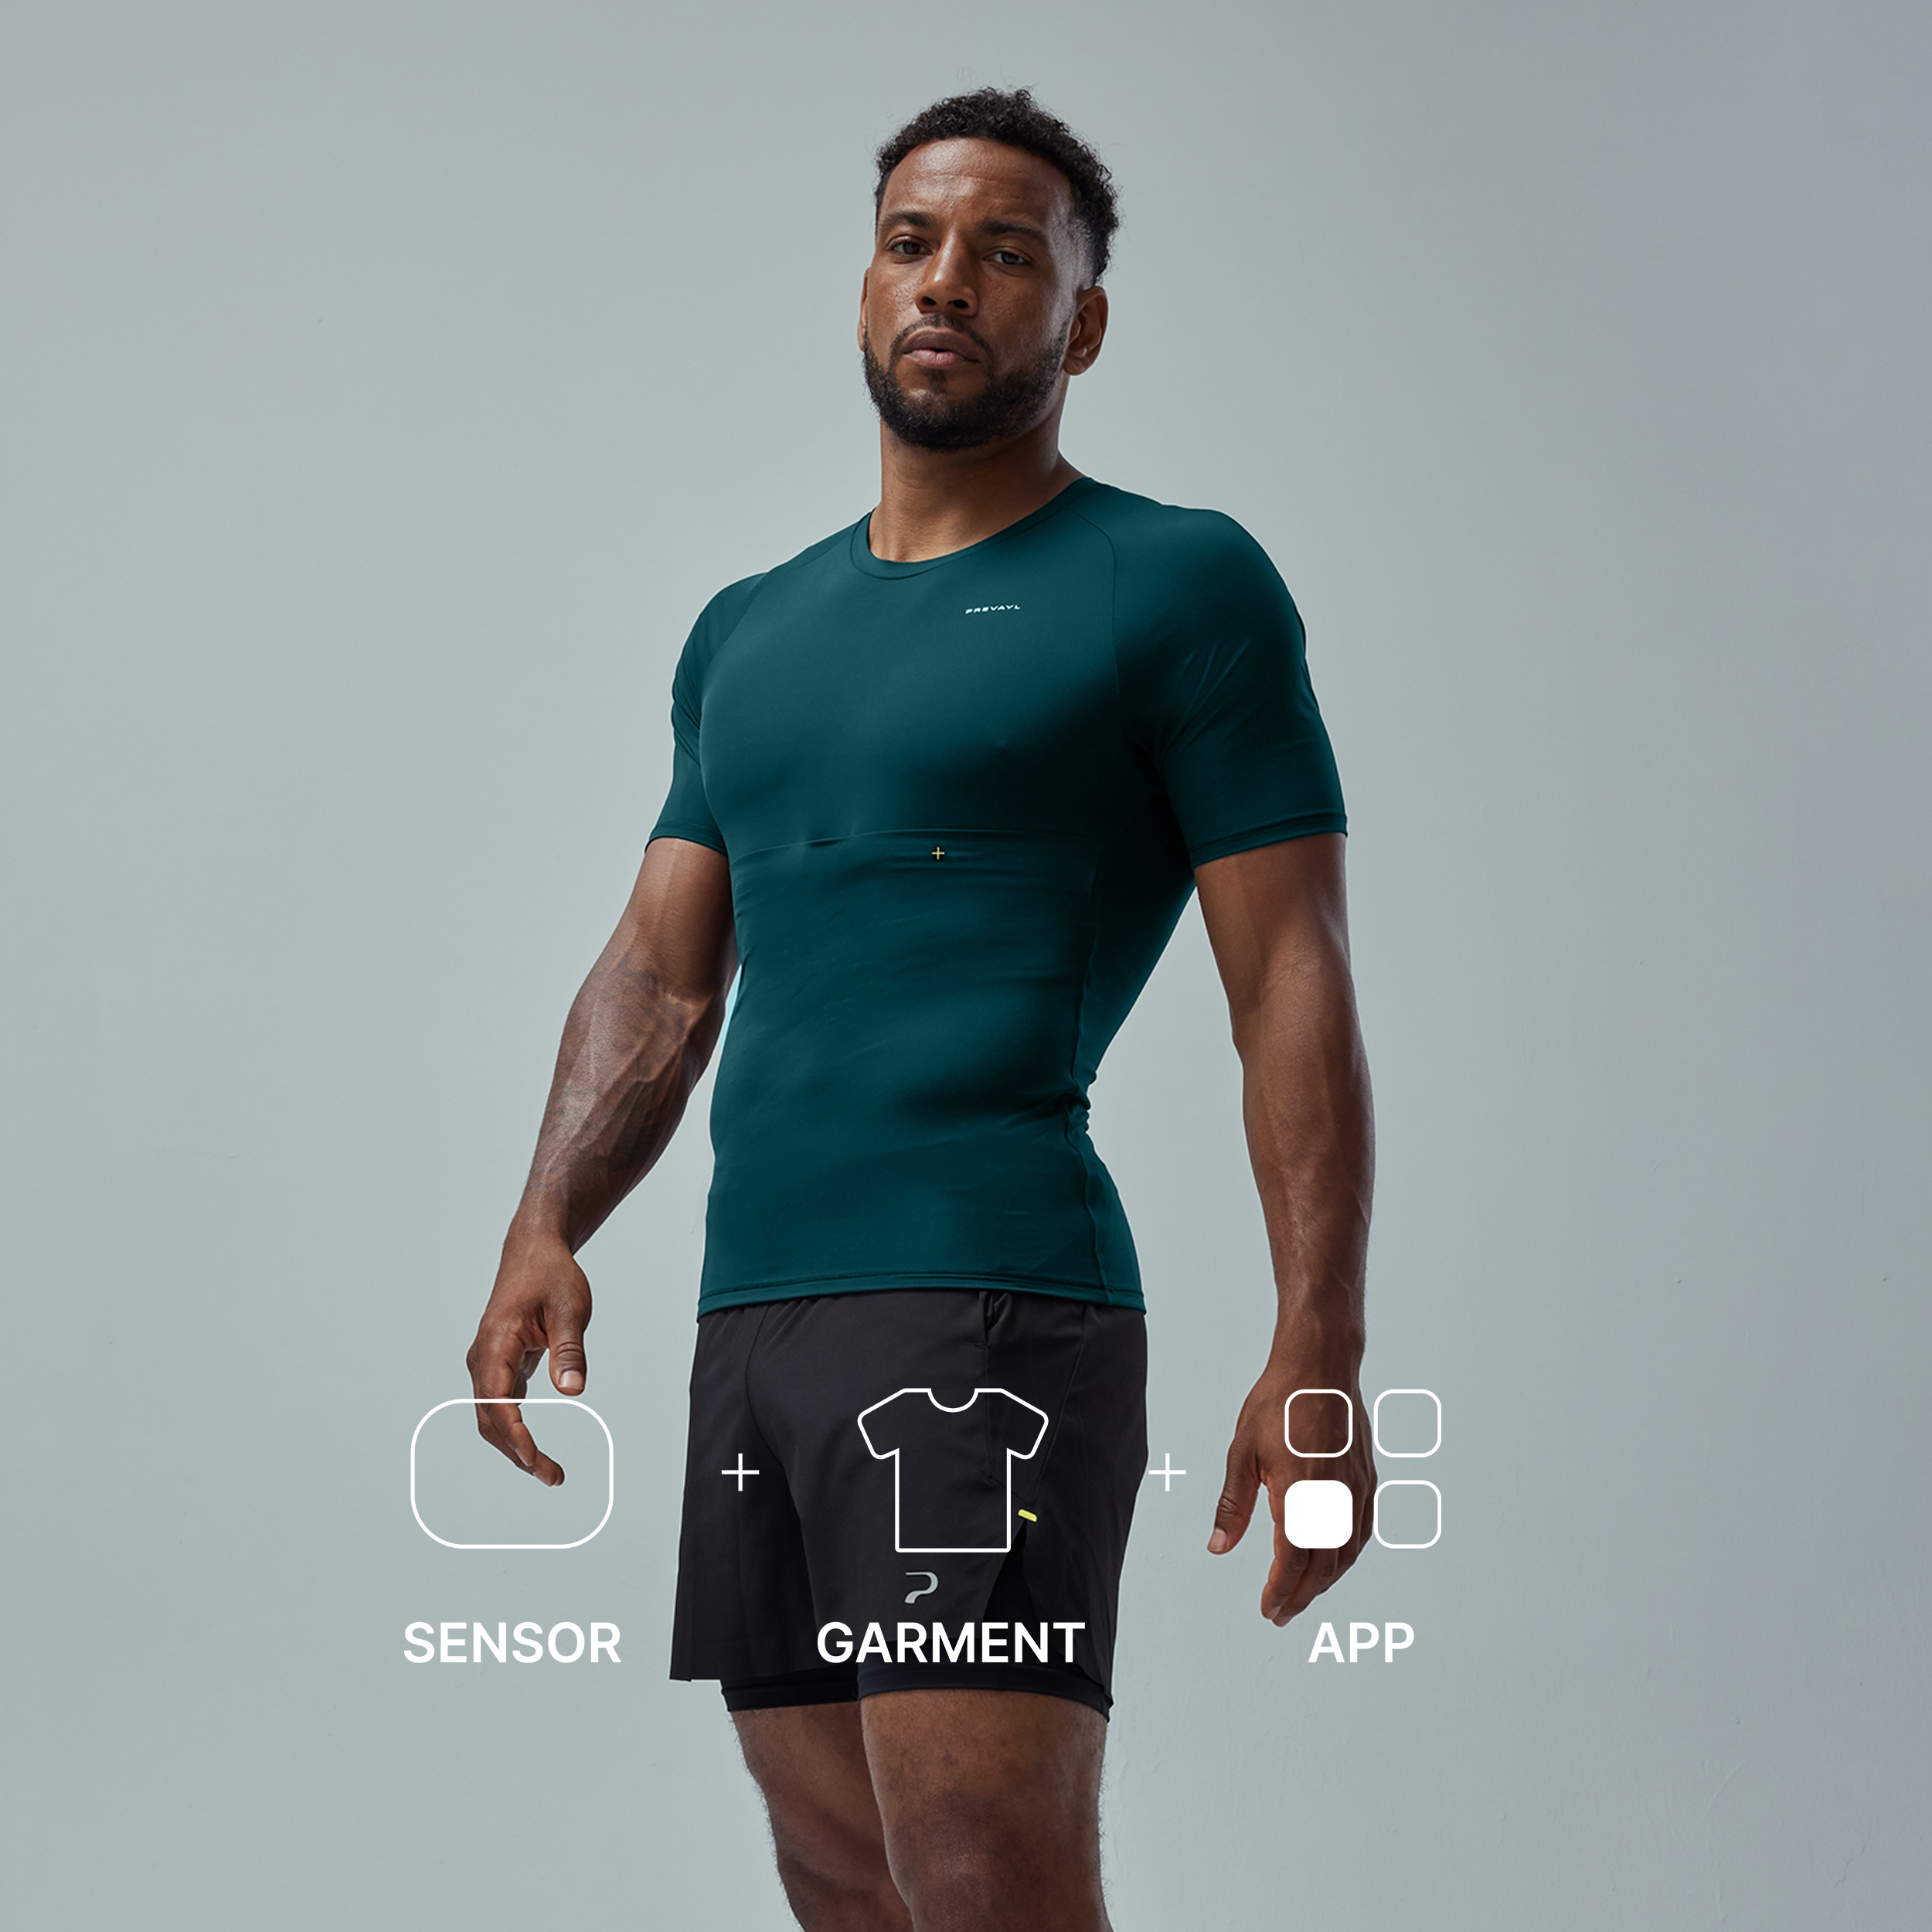 Smart Training Pack: Pine Green Smart T-Shirt